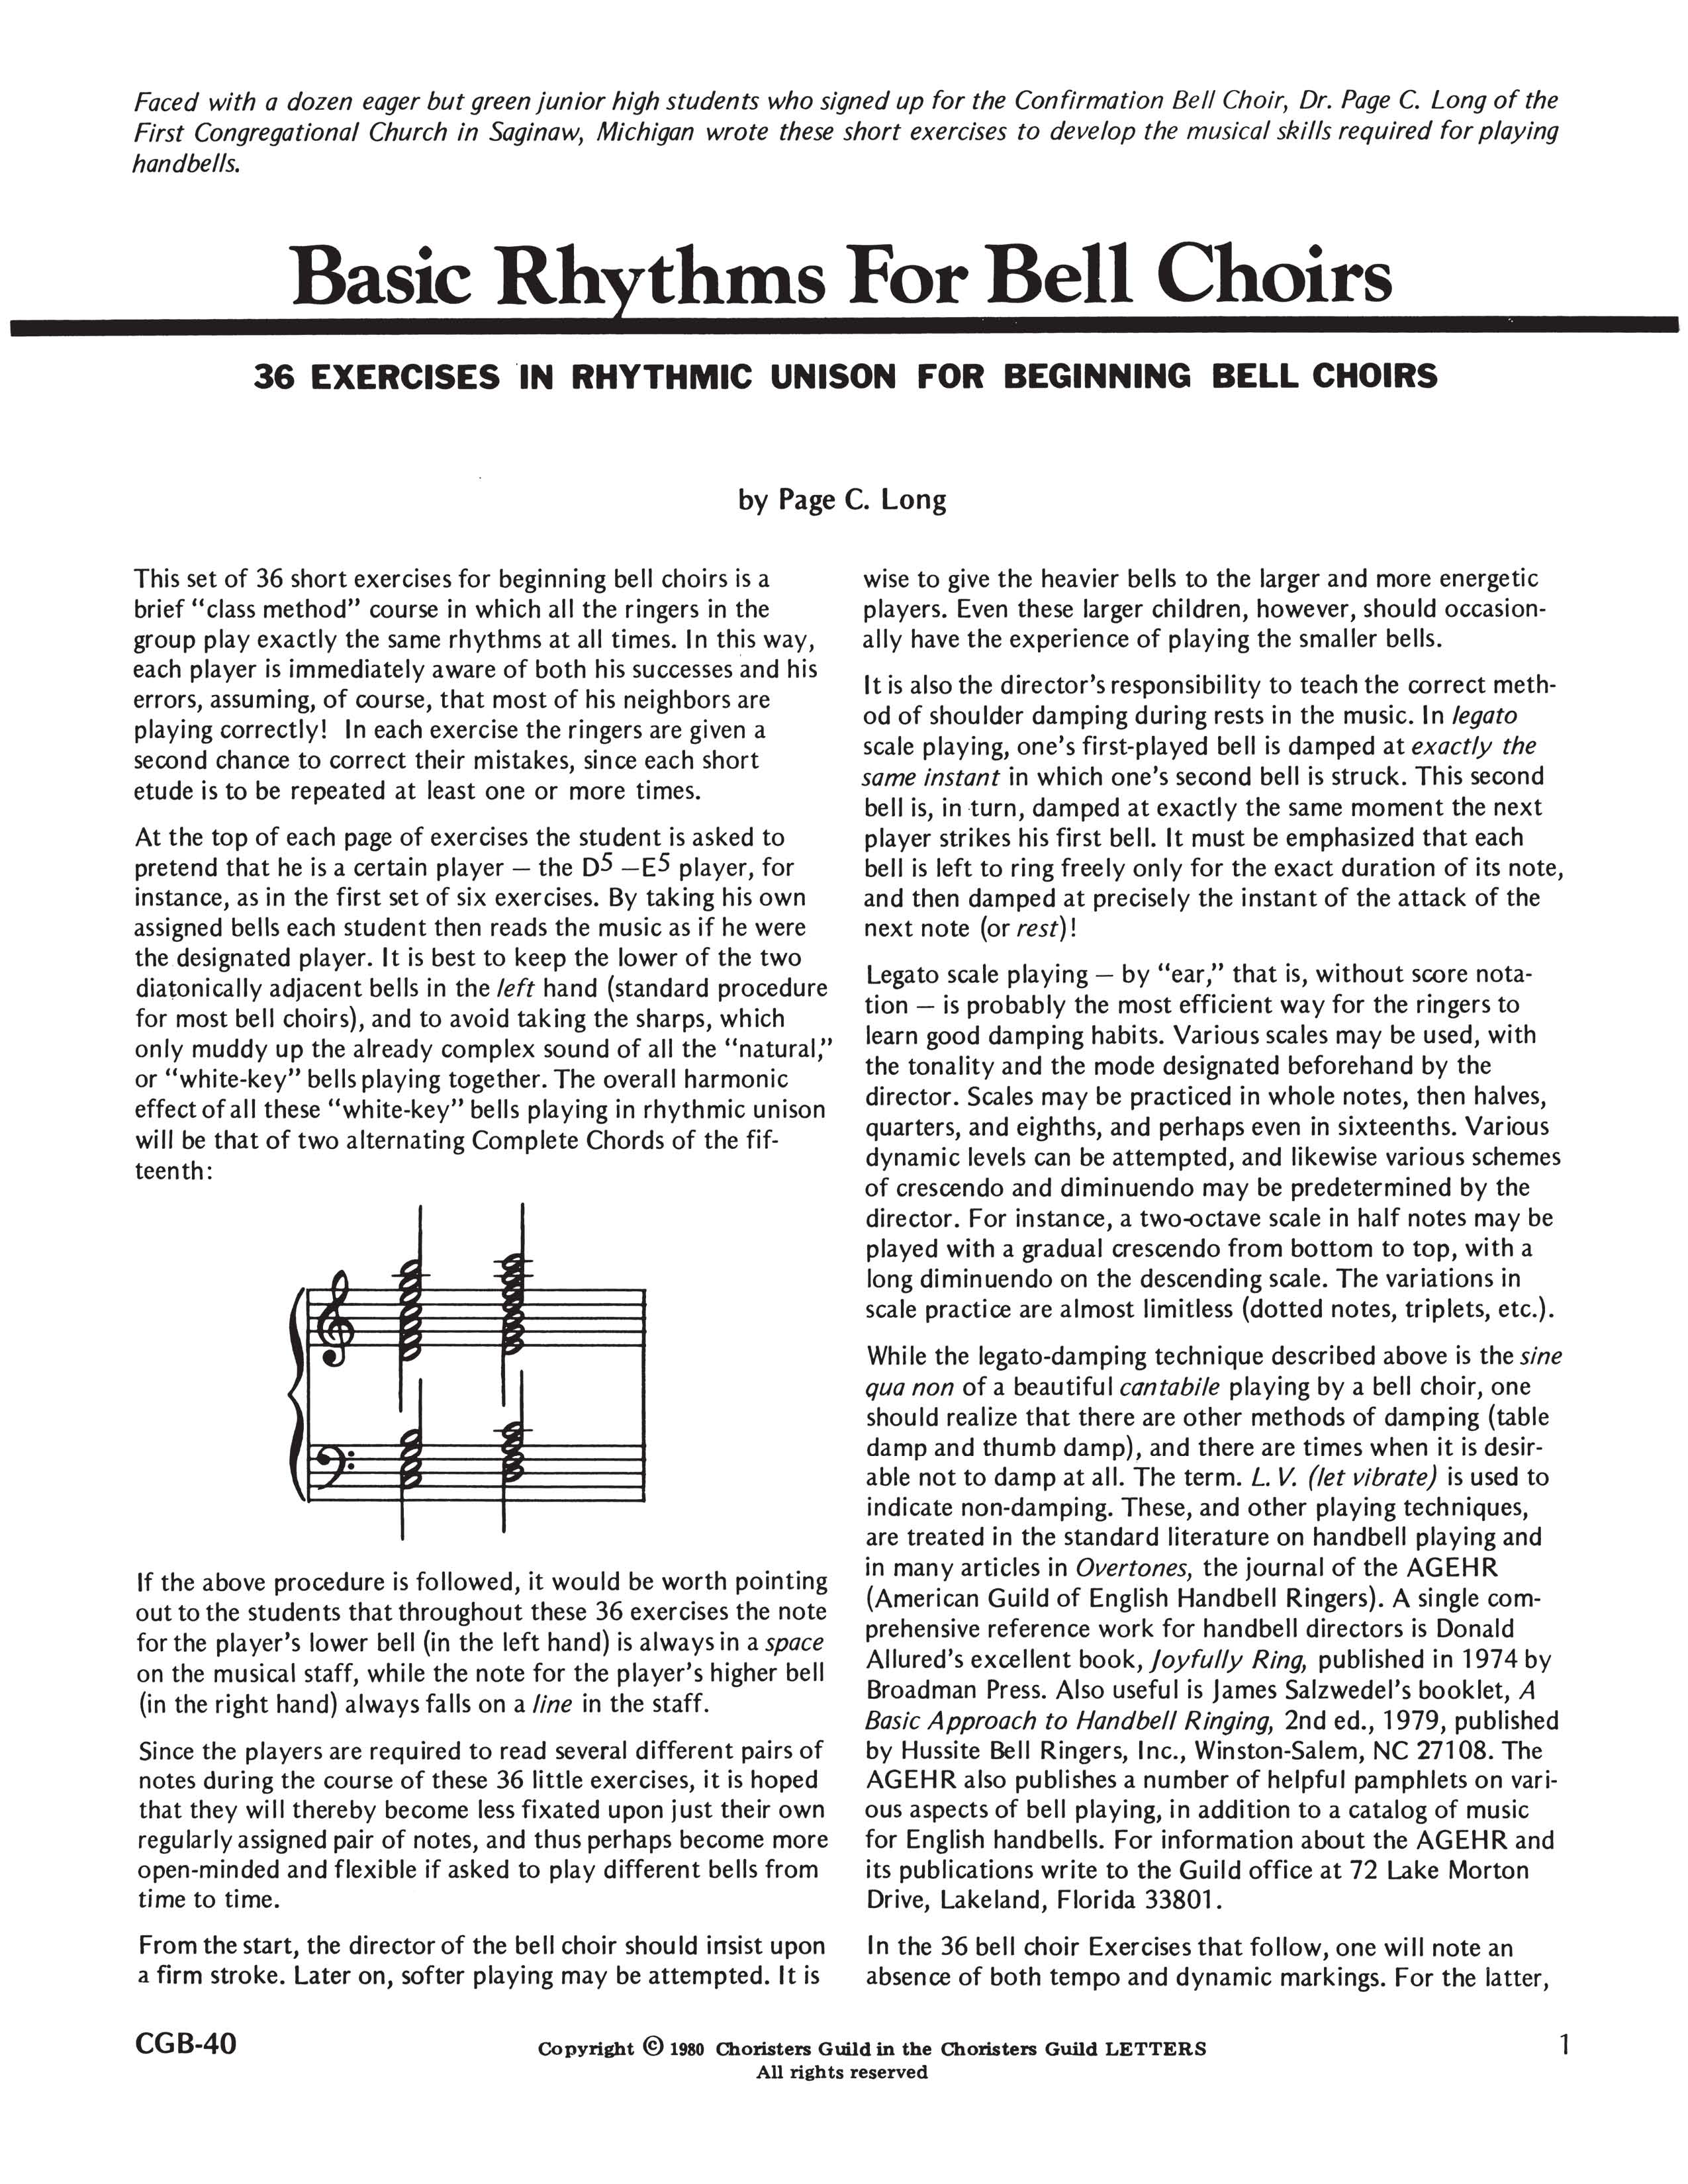 Basic Rhythms for Bell Choirs